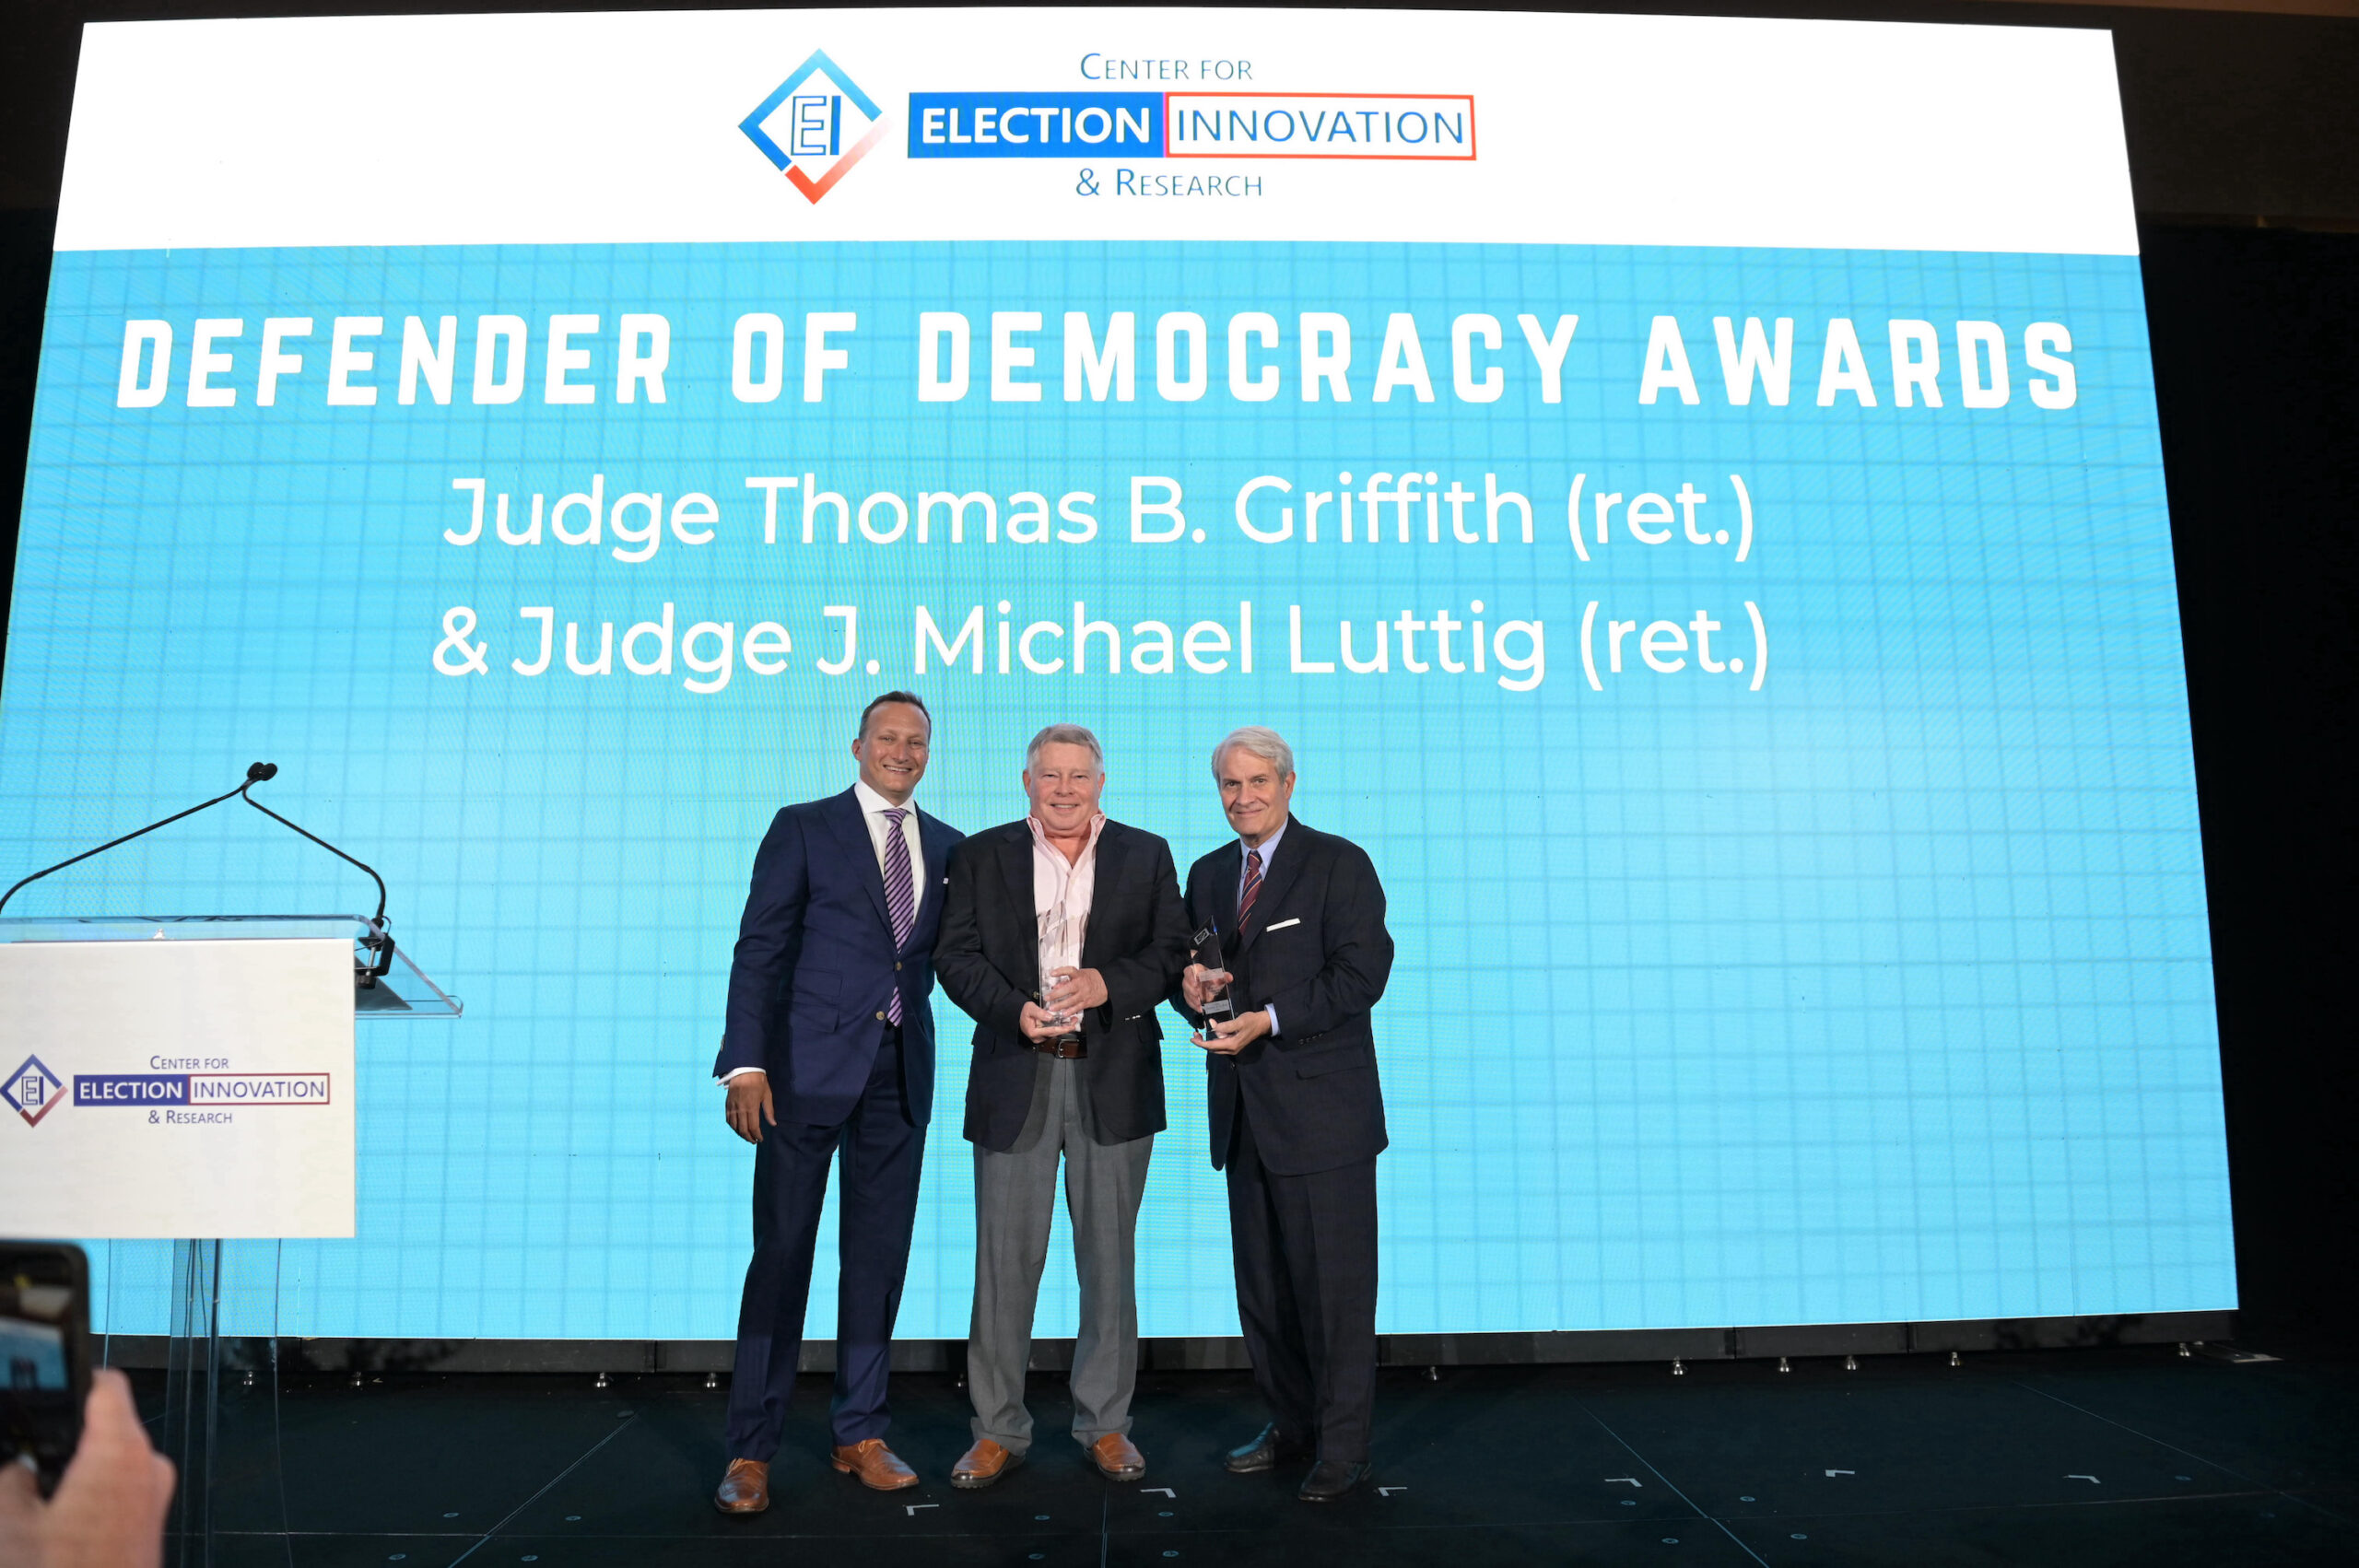 Judge Thomas B. Griffith & Judge J. Michael Luttig Receive CEIR Defenders of Democracy Award